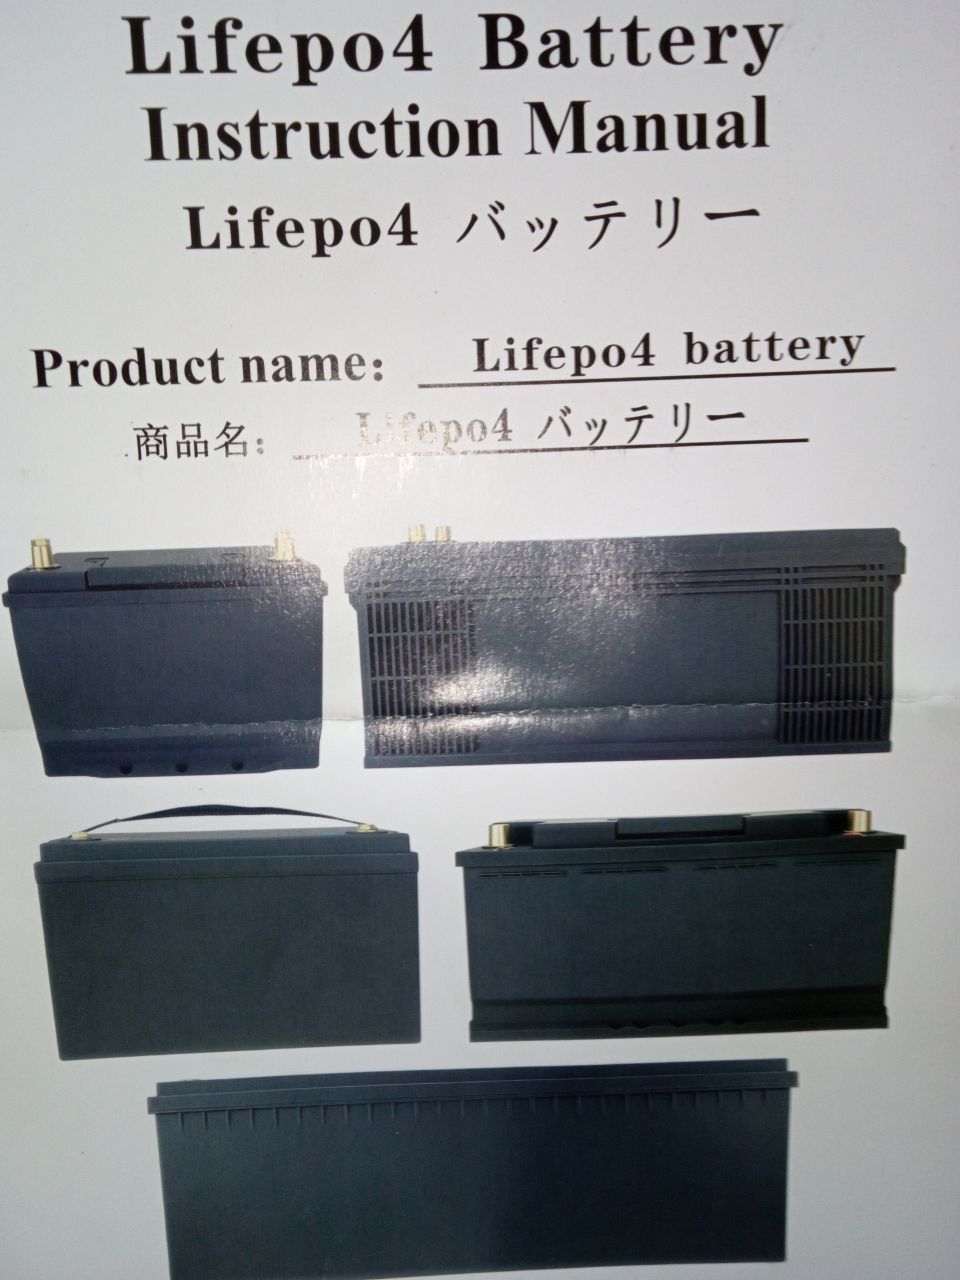 літій-залізо-фосфатний акумулятор FLLYPOWER 12.8V 100AH LiFePO4